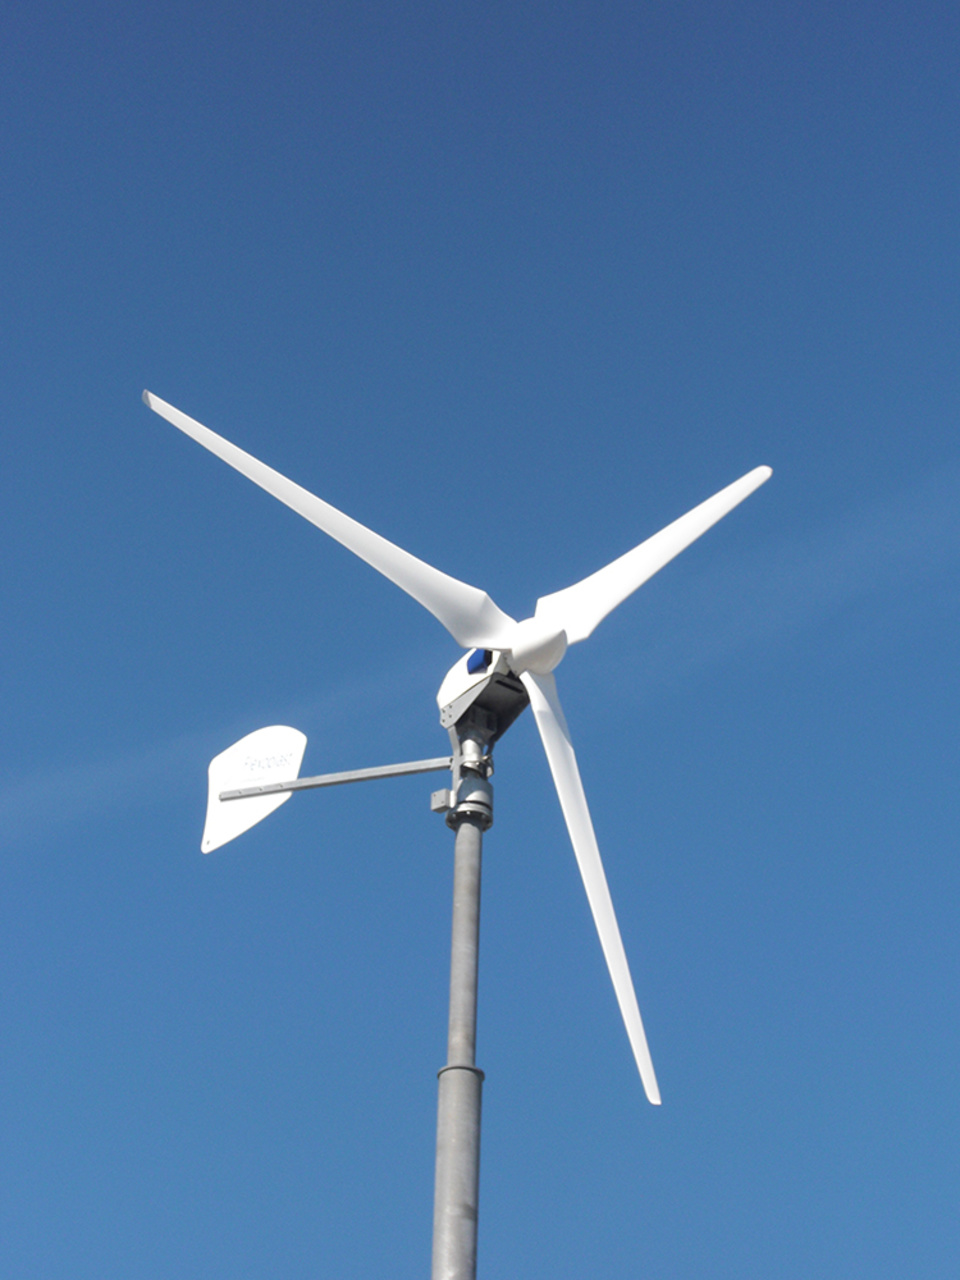 Windkraft2 bei Götzberger Elektroanlagen GmbH in 85521